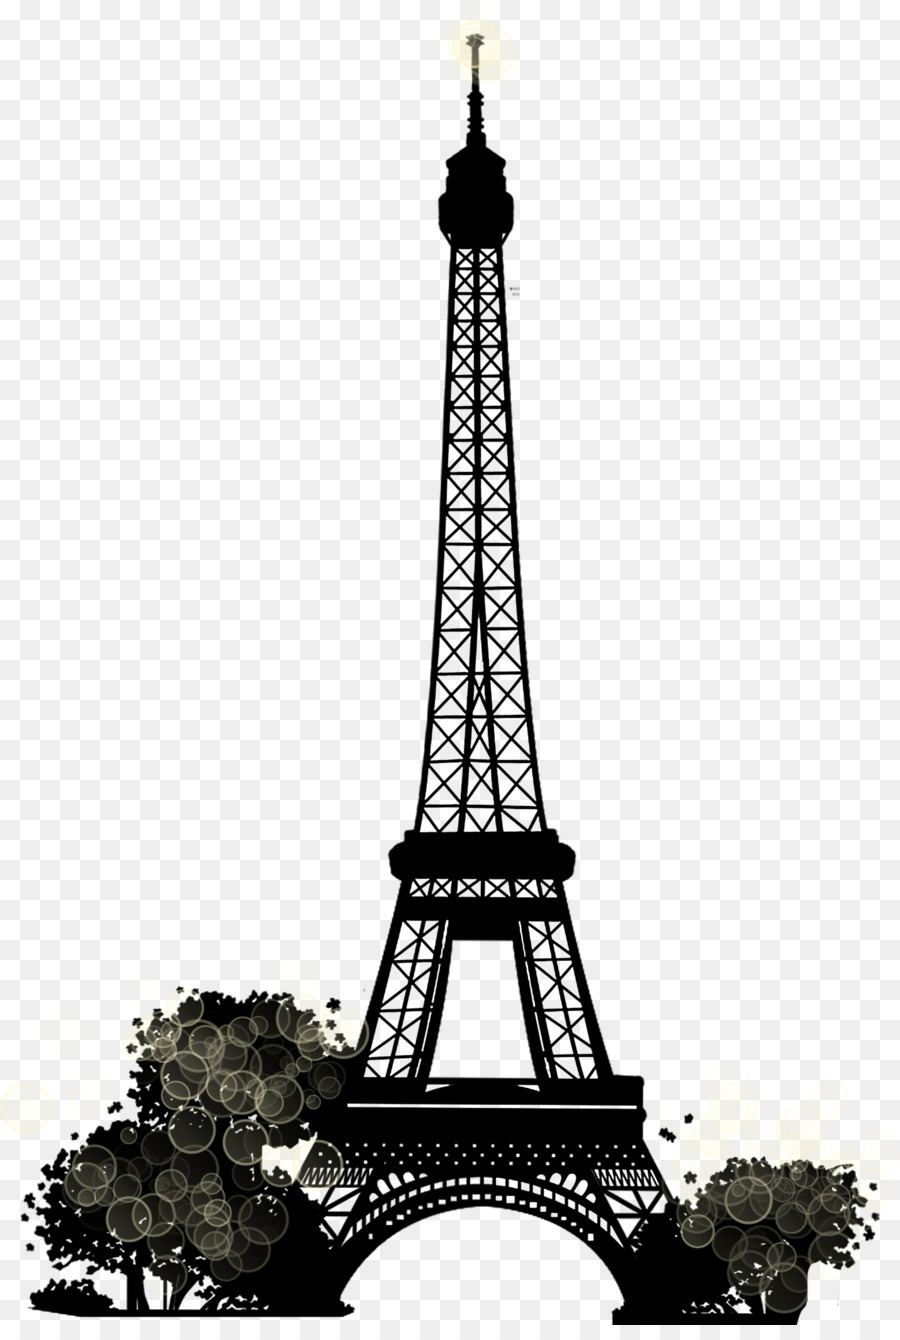 Eiffel Tower Landmark Clip art - Paris png download - 1430*2106 - Free Transparent Eiffel Tower png Download.